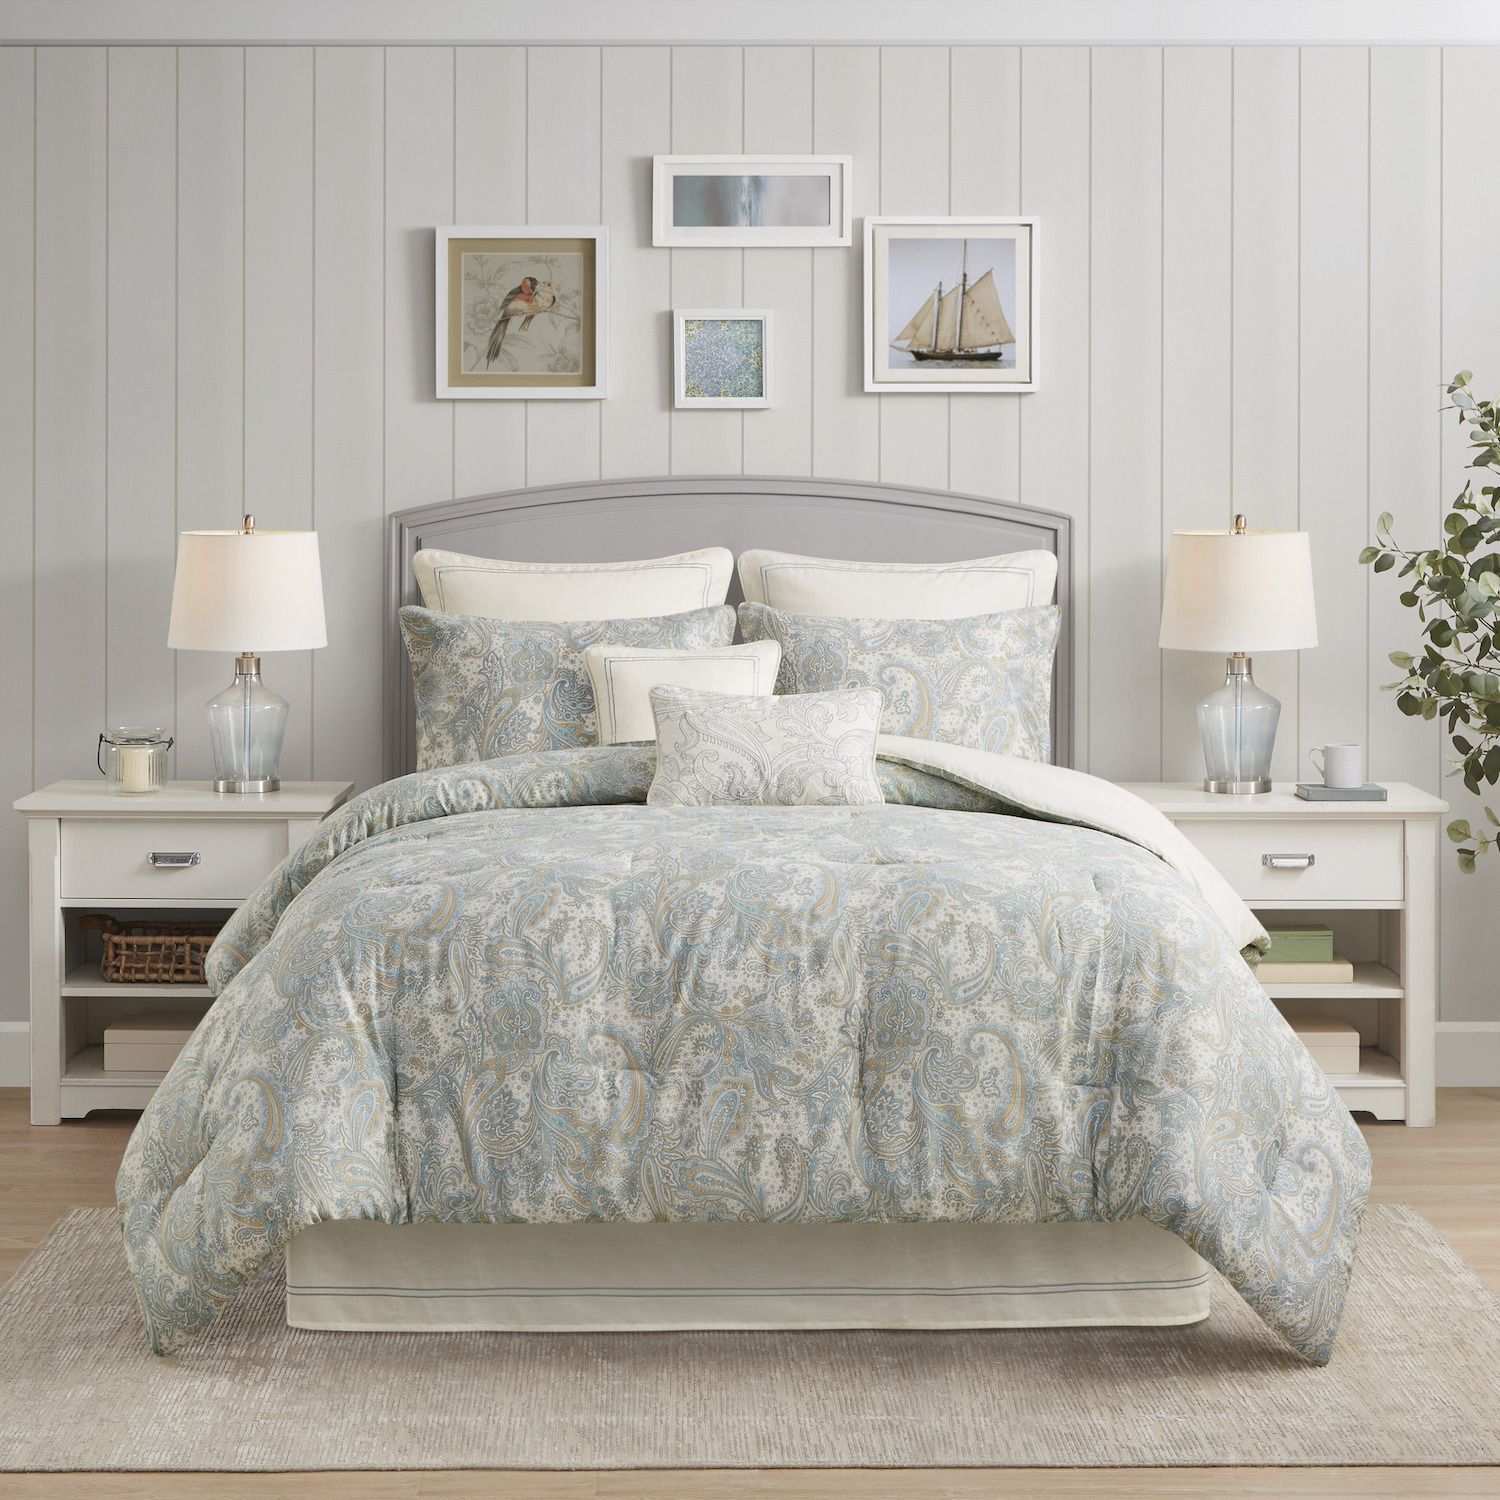 Image for Harbor House Chelsea Comforter Set at Kohl's.